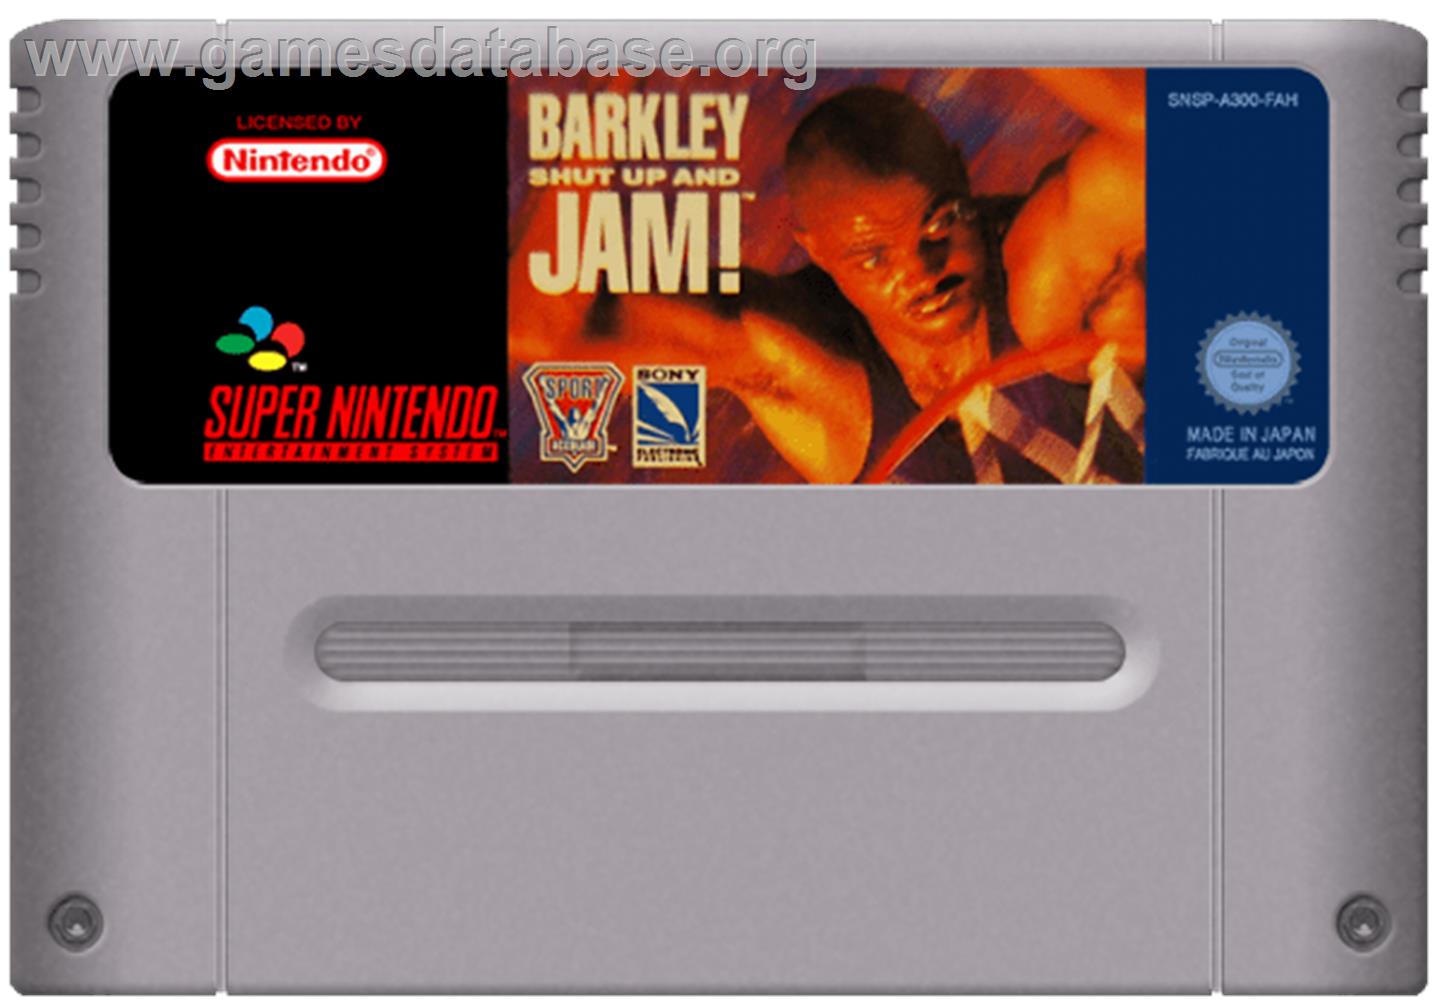 Barkley: Shut Up and Jam! - Nintendo SNES - Artwork - Cartridge